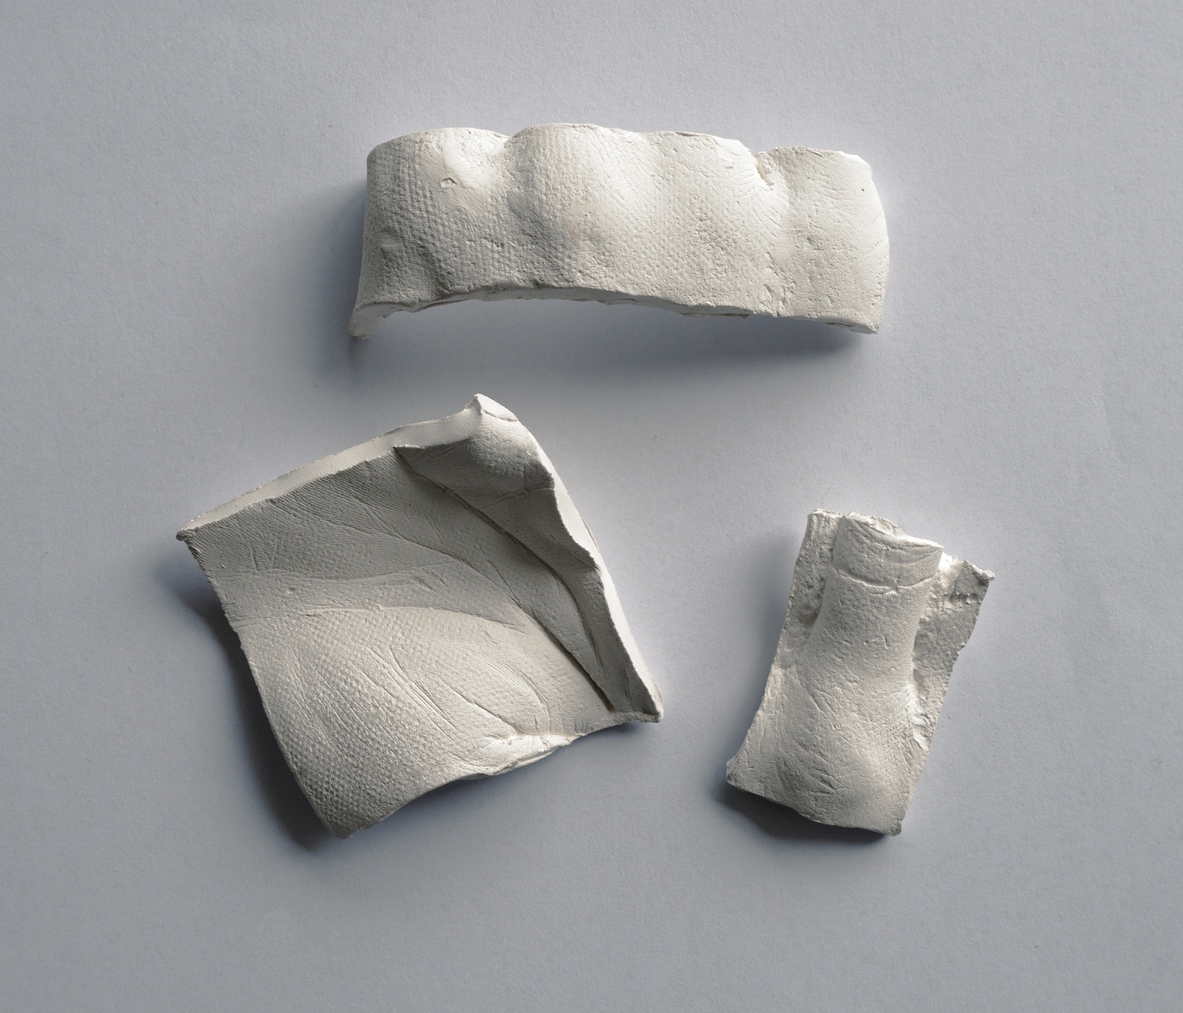 Image: Areta Wilkinson, Untitled (knuckle), 2003, ceramic. Photo: Studio La Gonda.